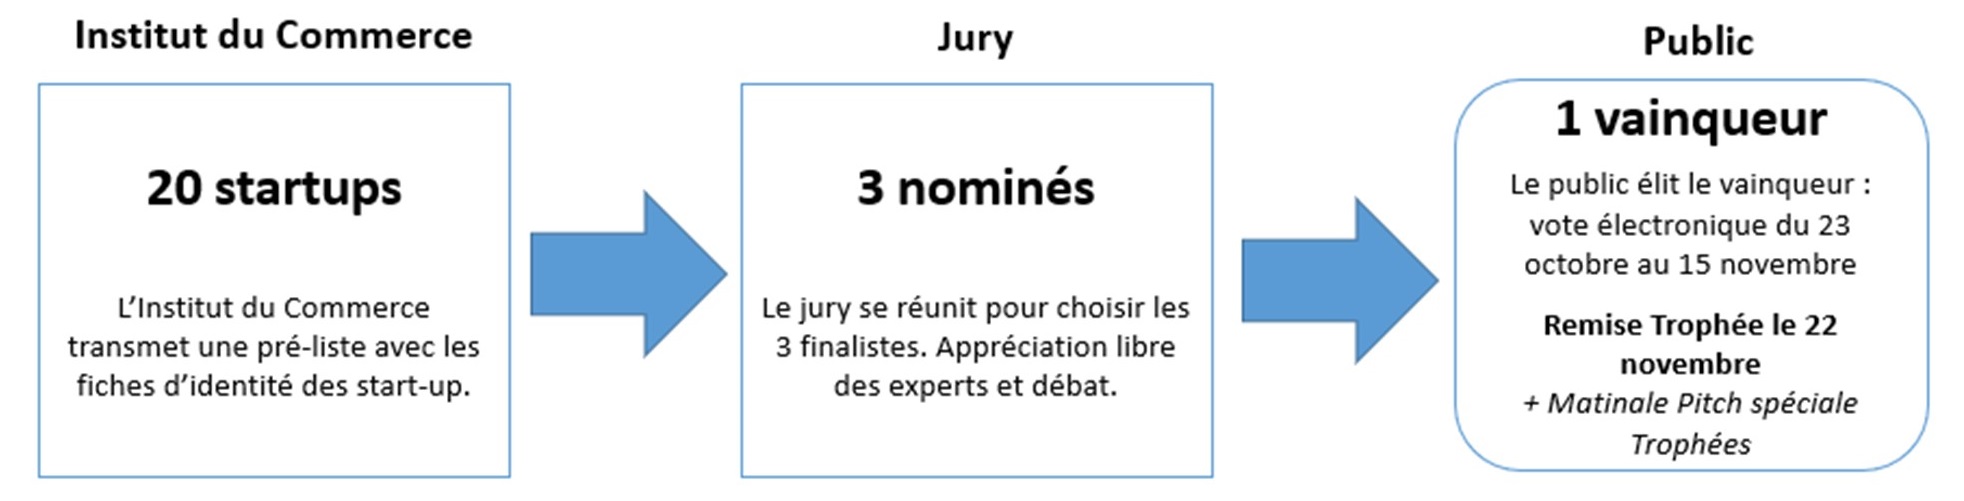 processus_selection_innolab_jury_2017